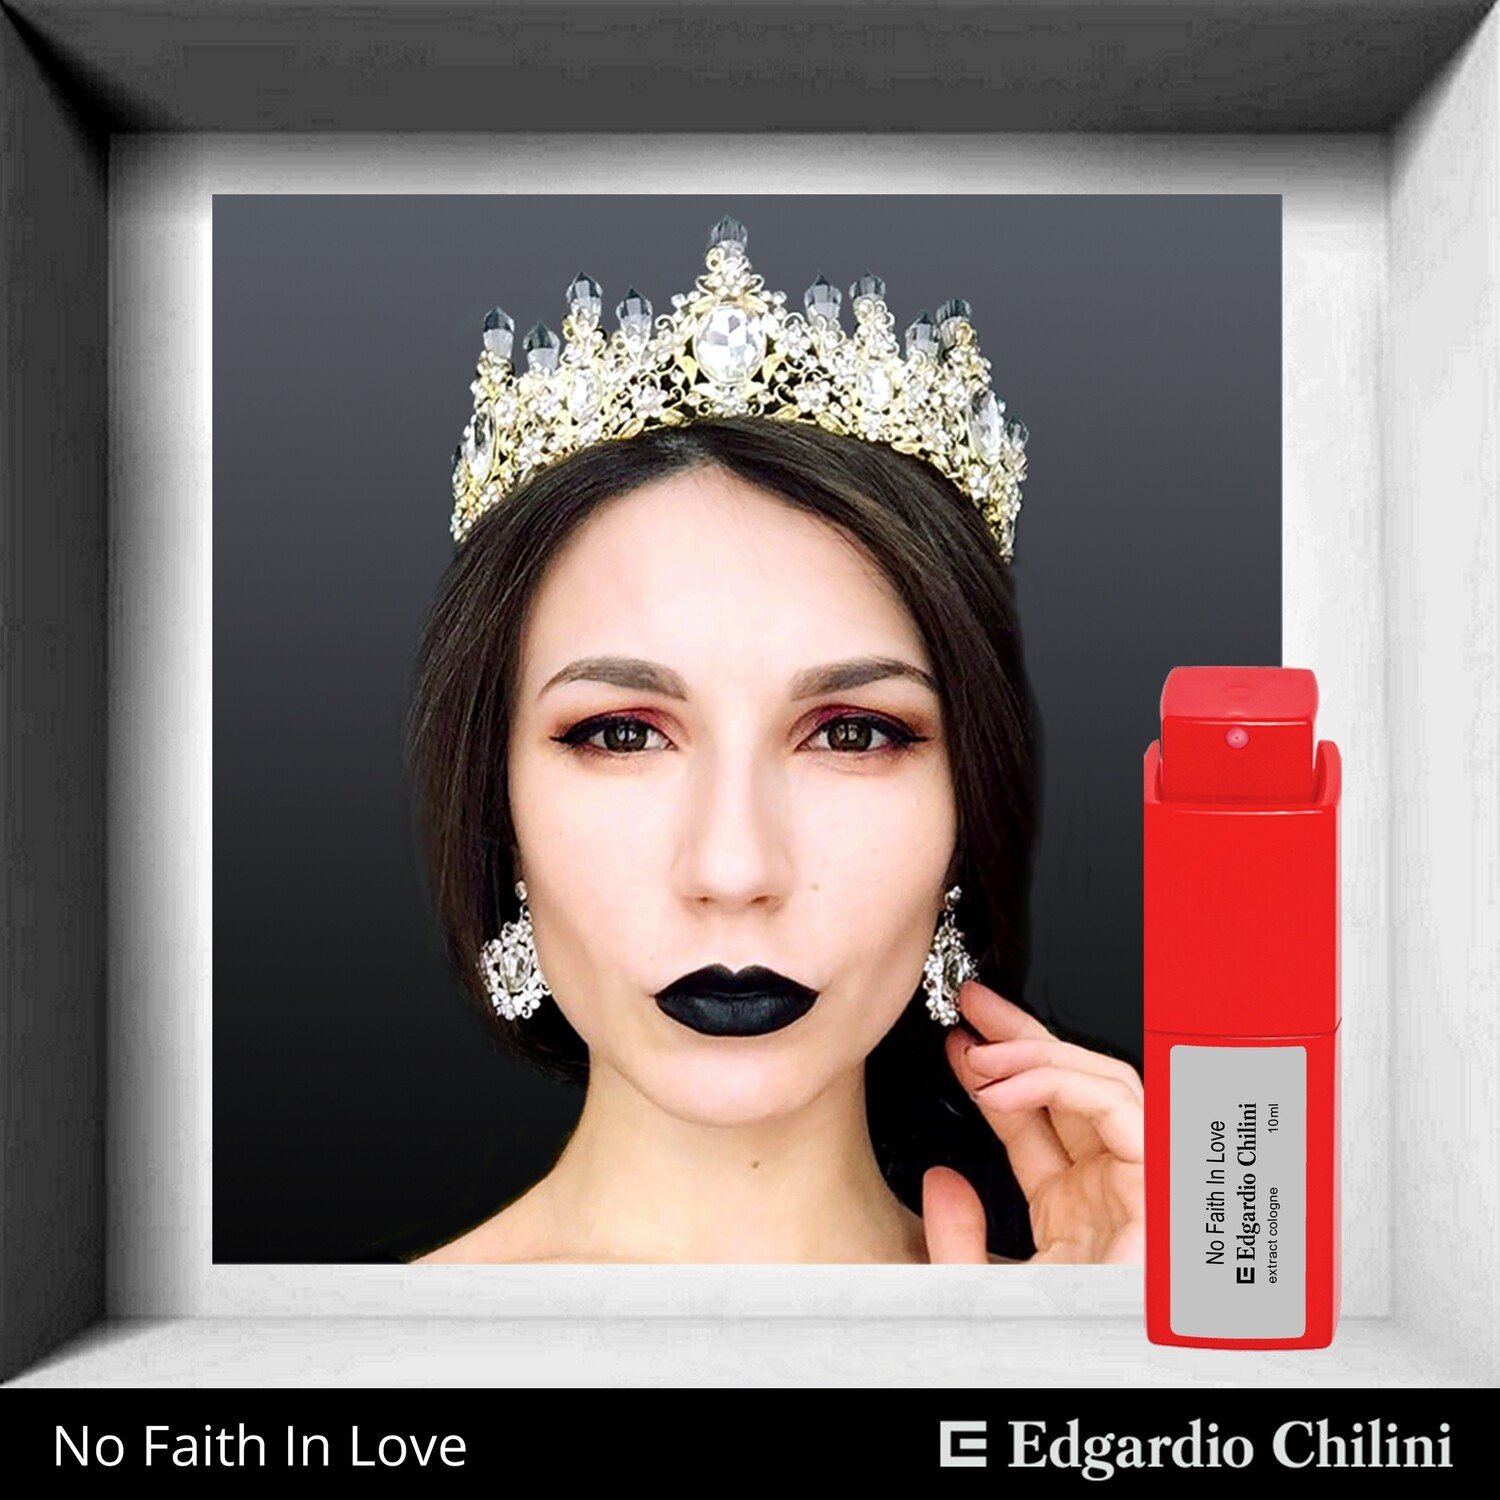 Edgardio Chilini, No Faith In Love, fresh jasmine fragrance